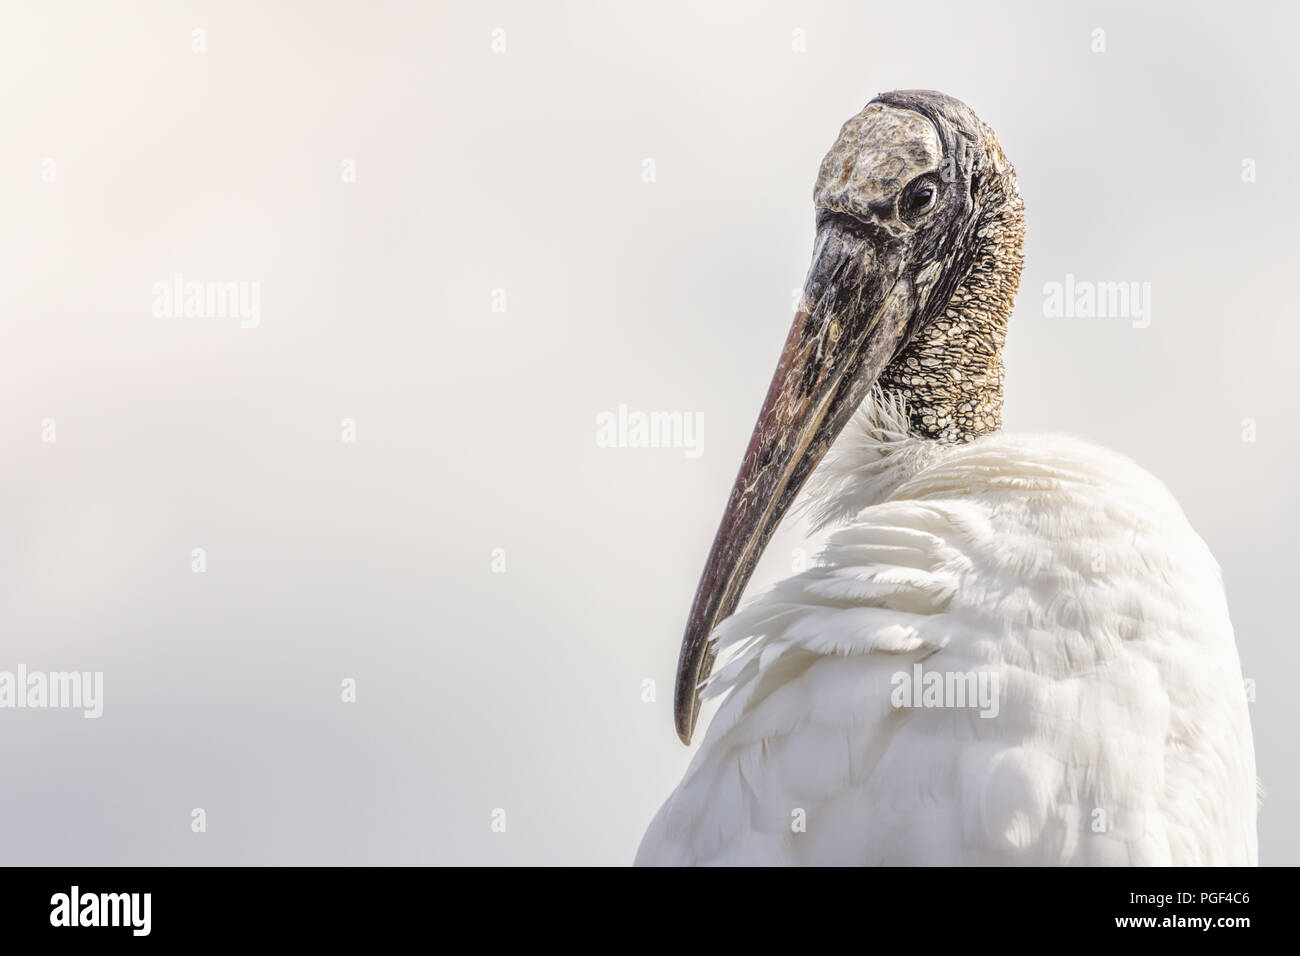 An endangered wood stork (Mycteria americana) in Florida, Stock Photo